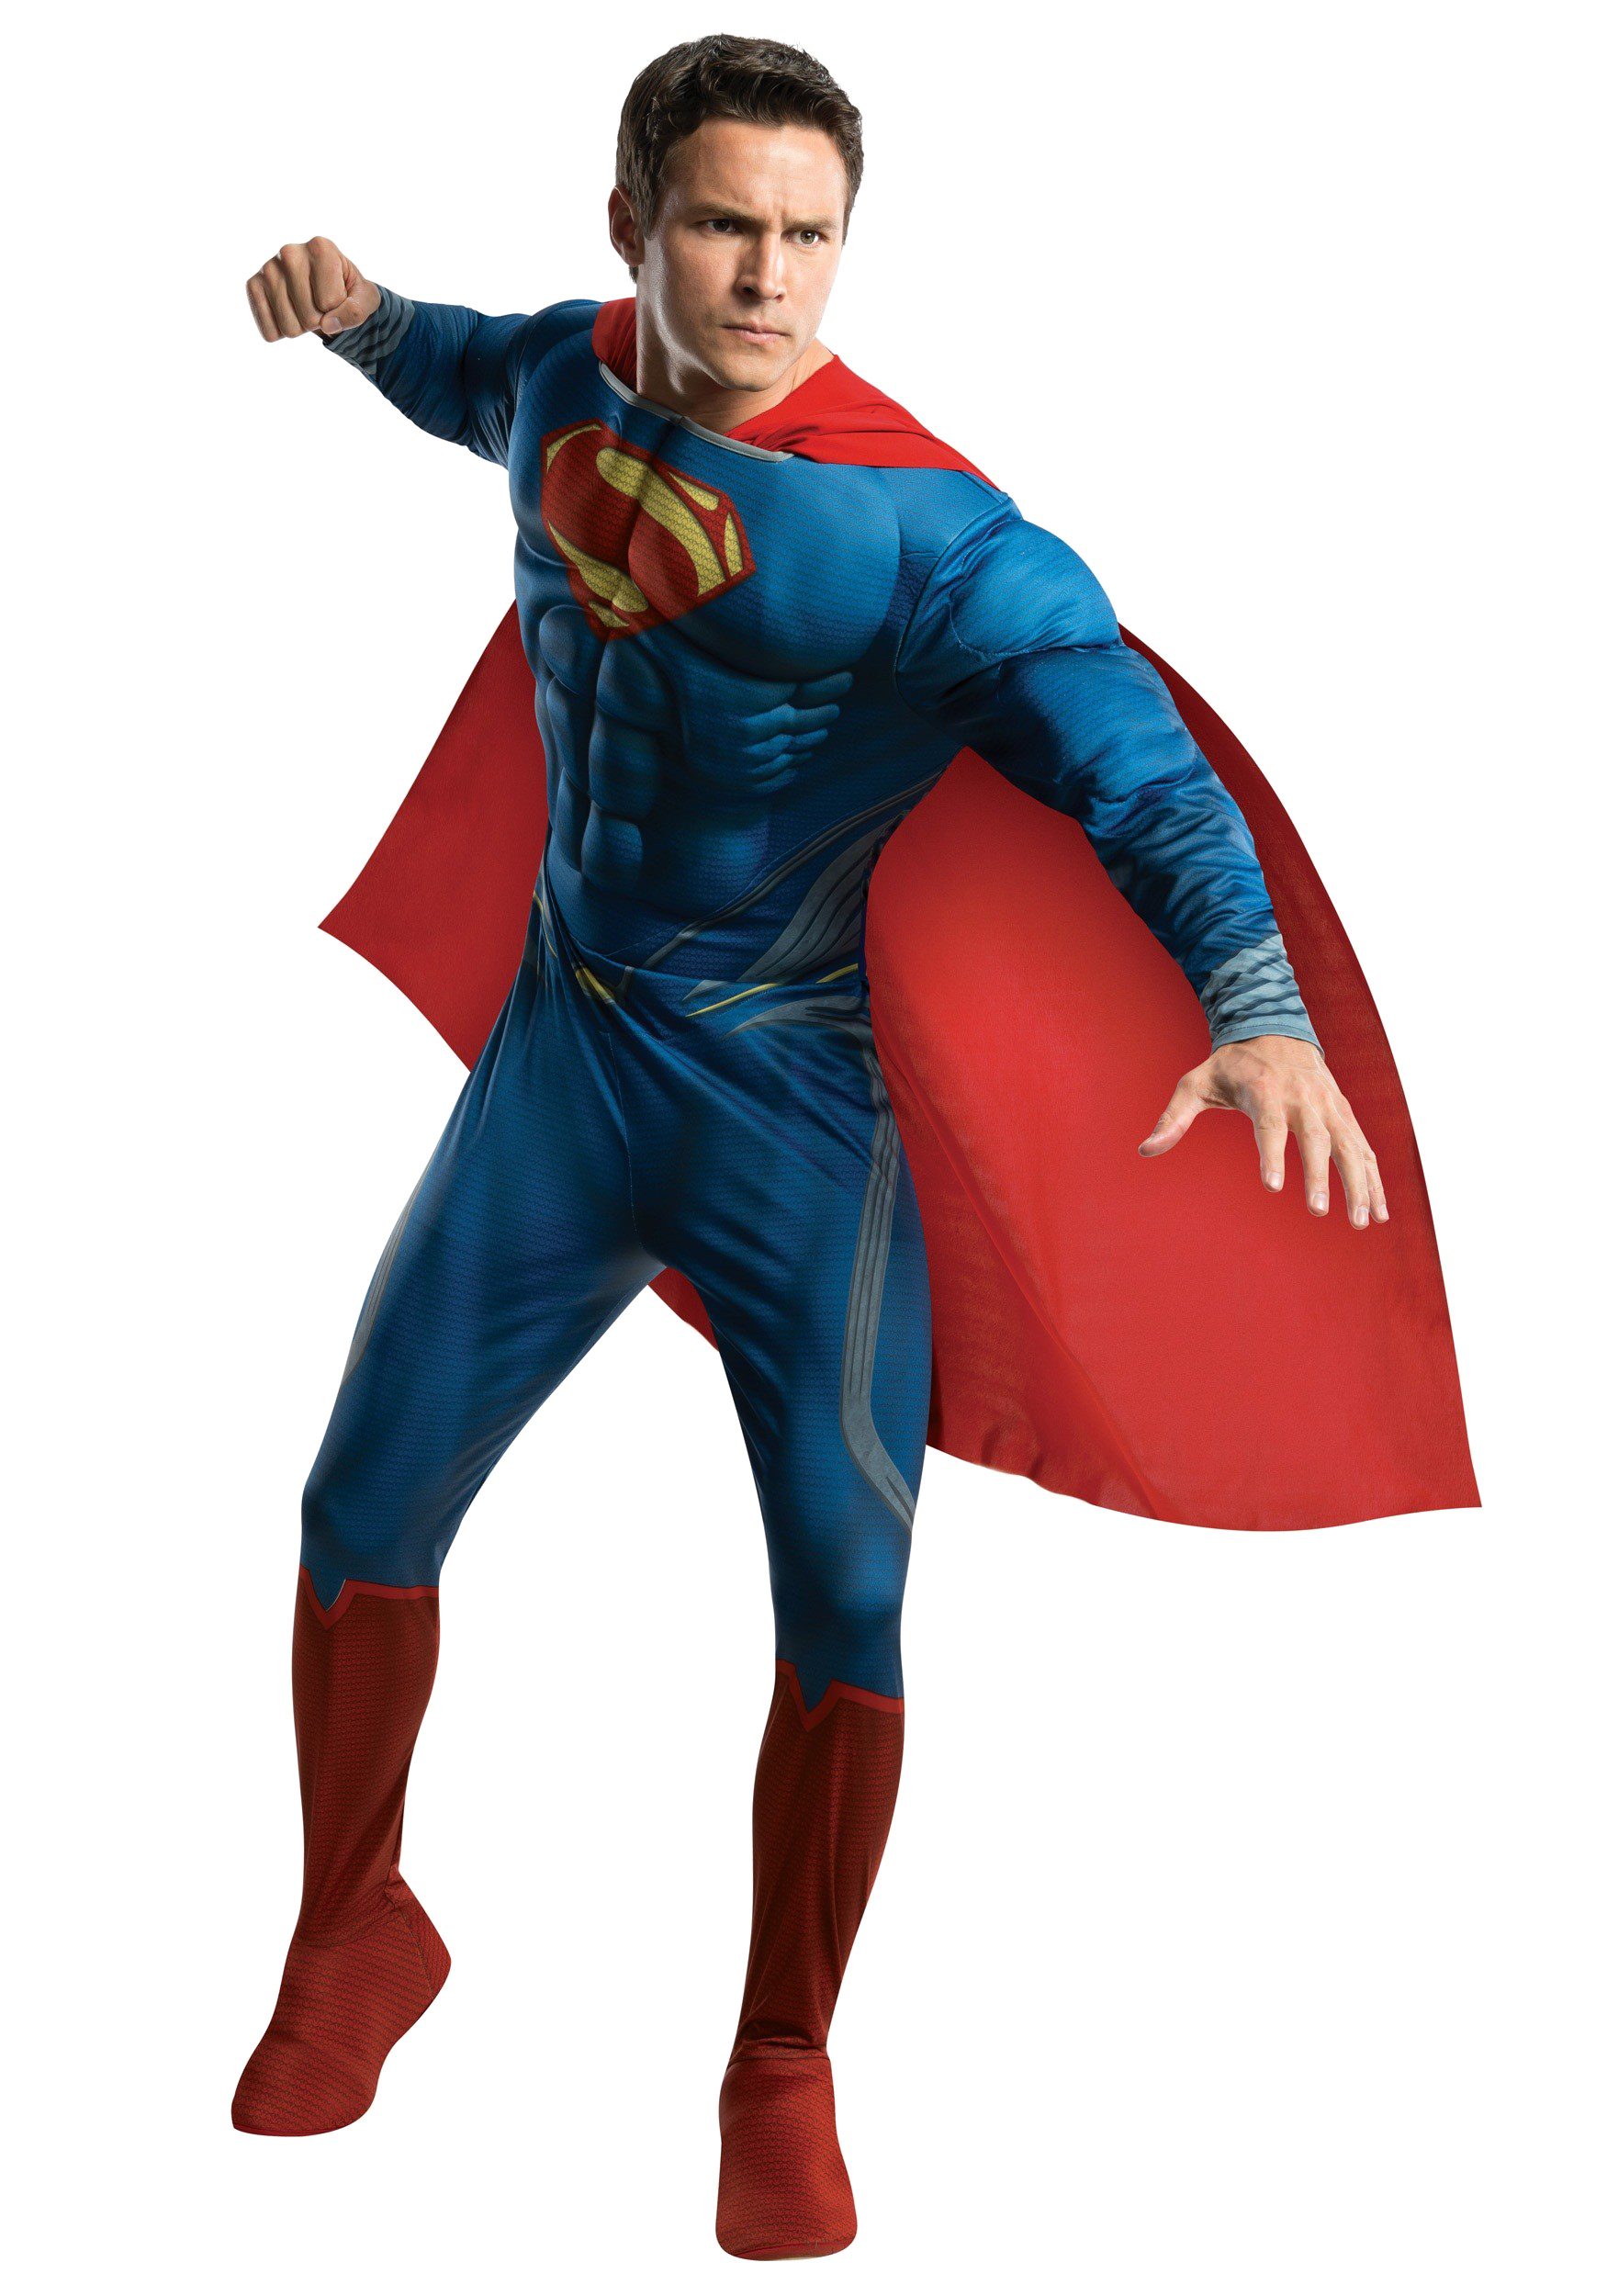 Superman PNG Background Image